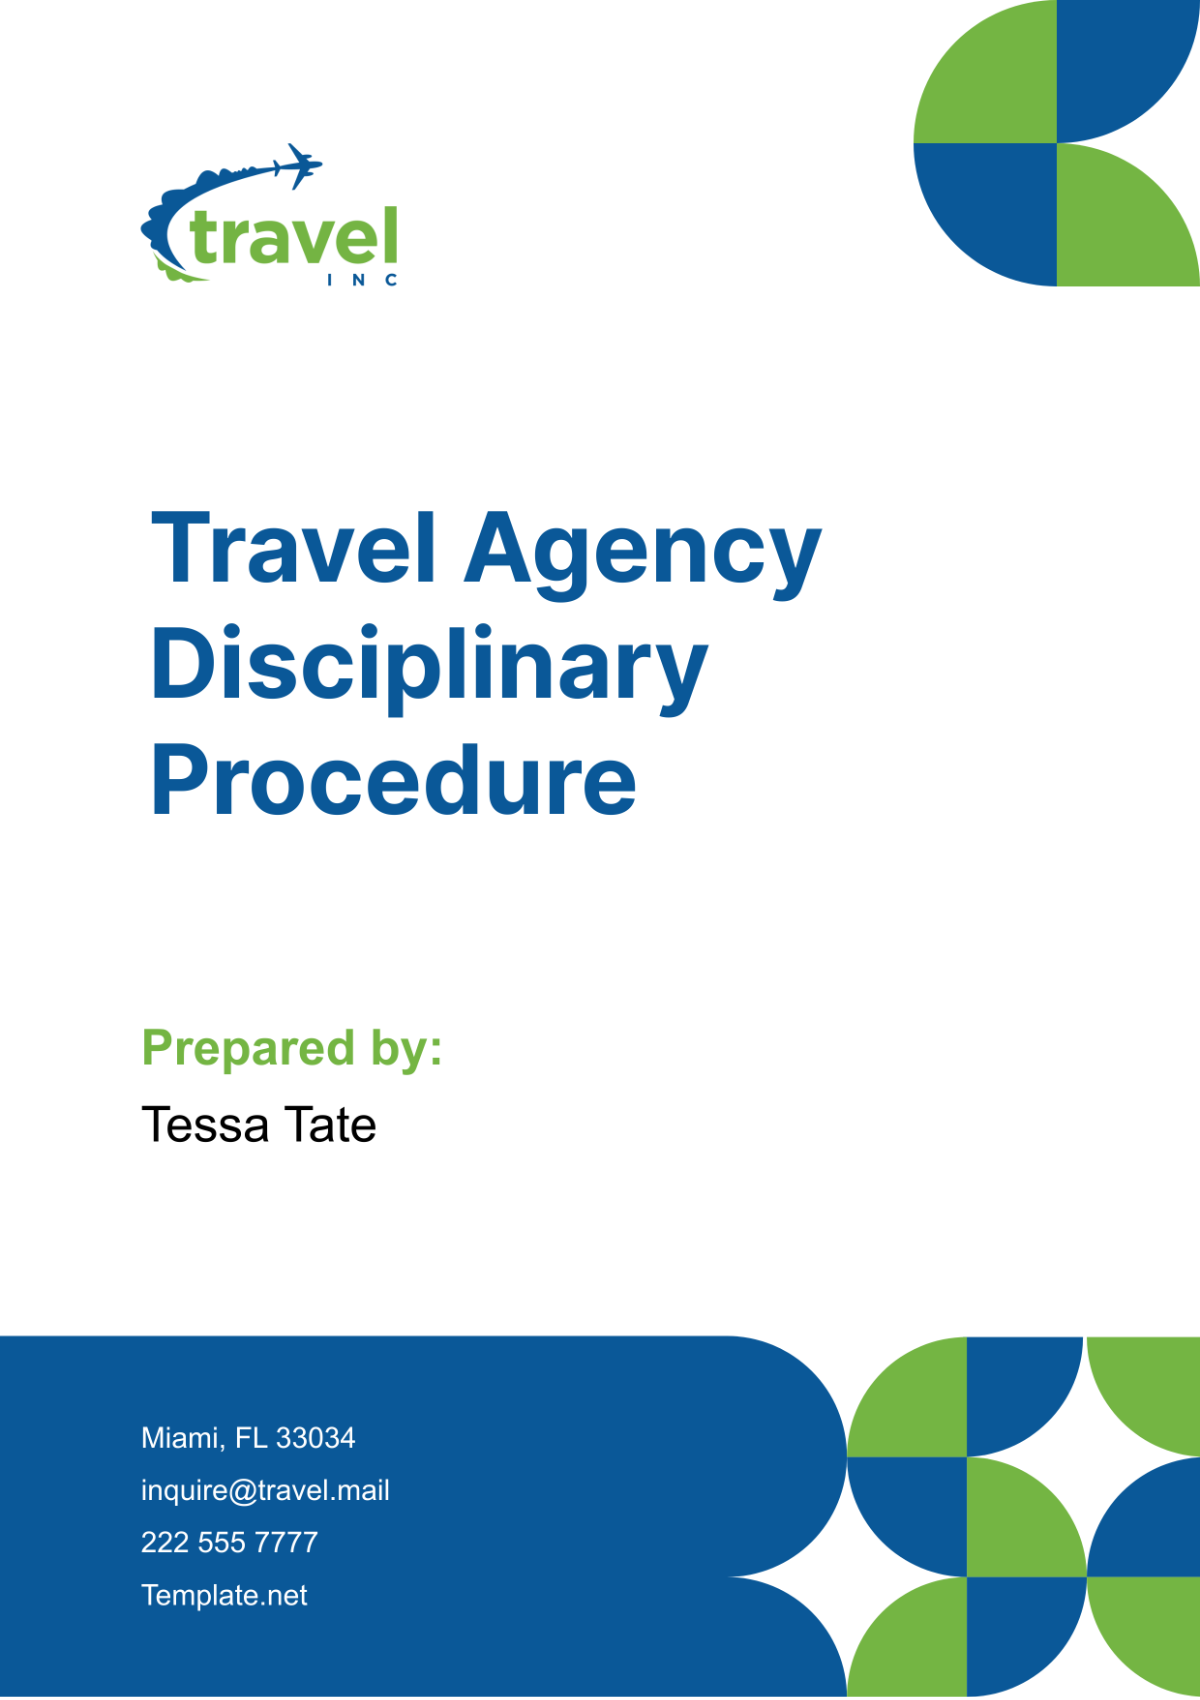 Travel Agency Disciplinary Procedure Template